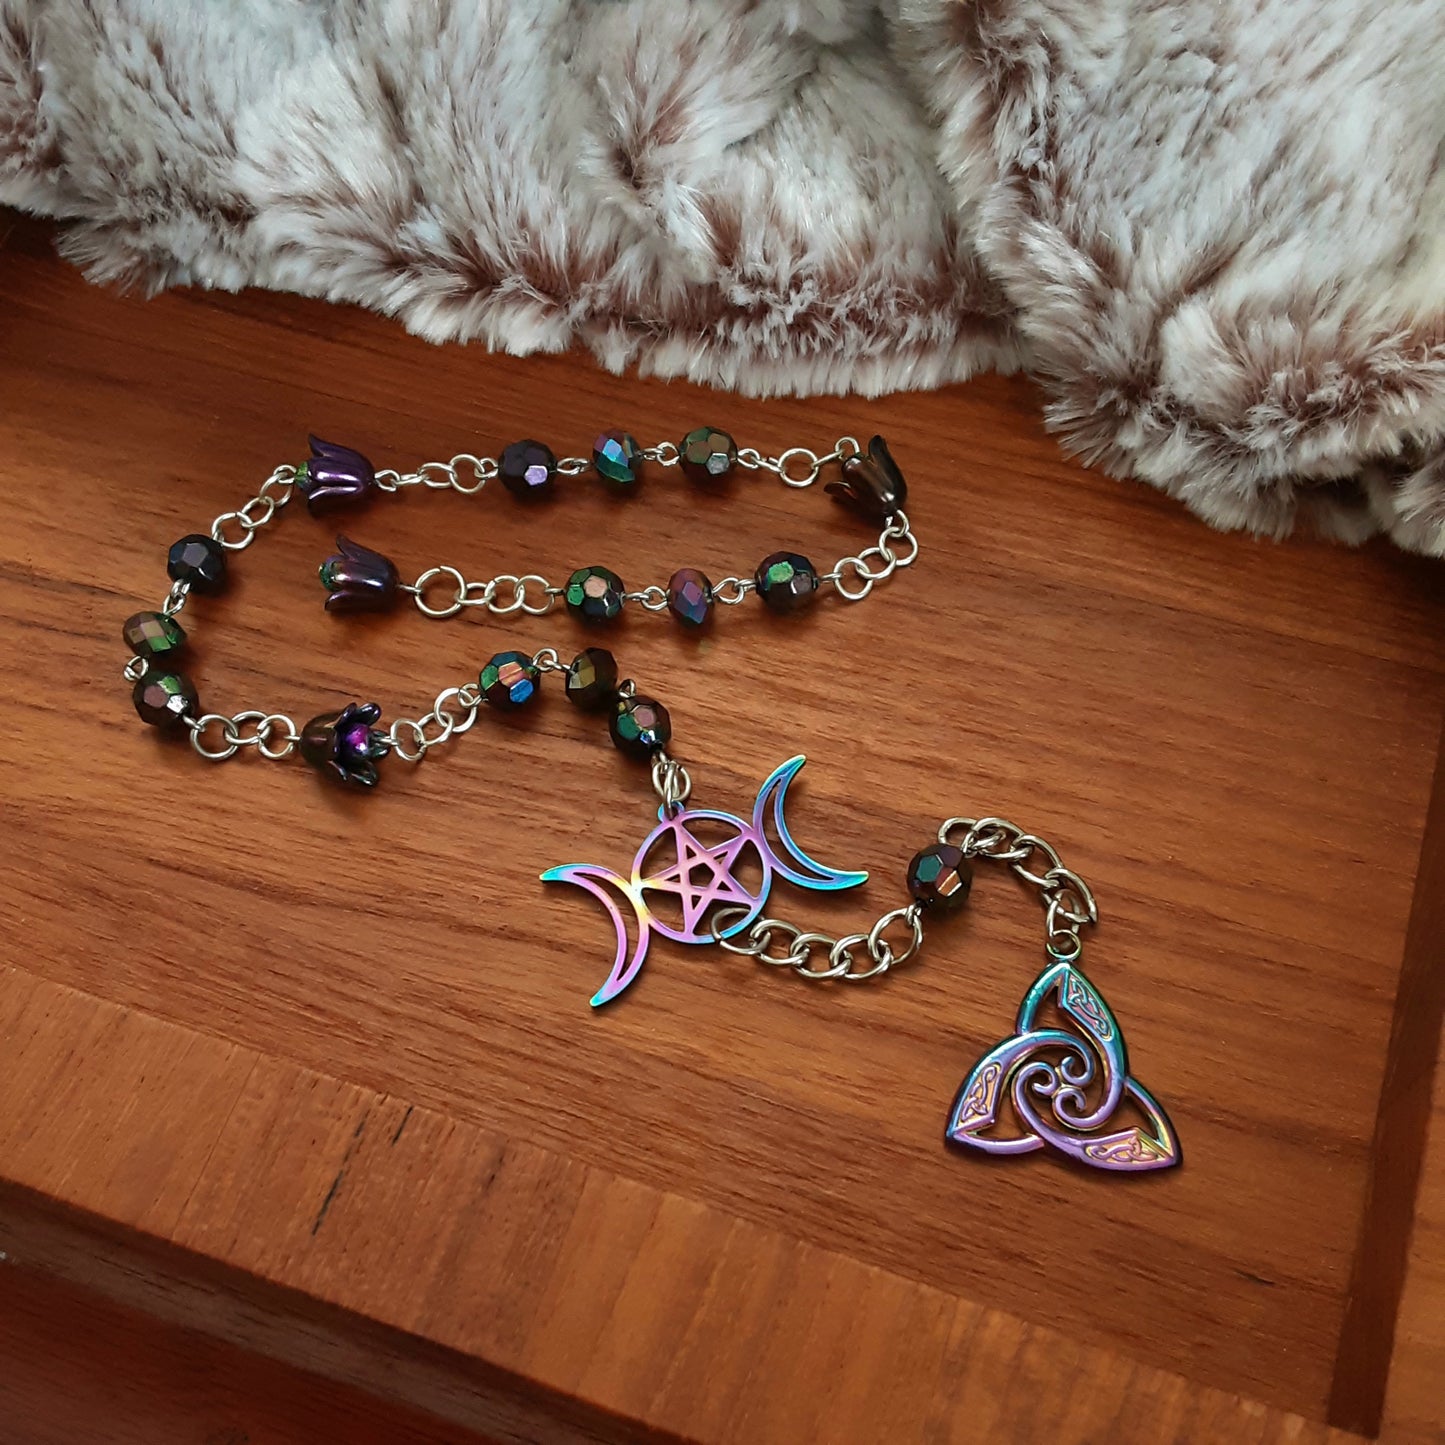 Triple Moon Goddess prayer beads with dark rainbow flowers